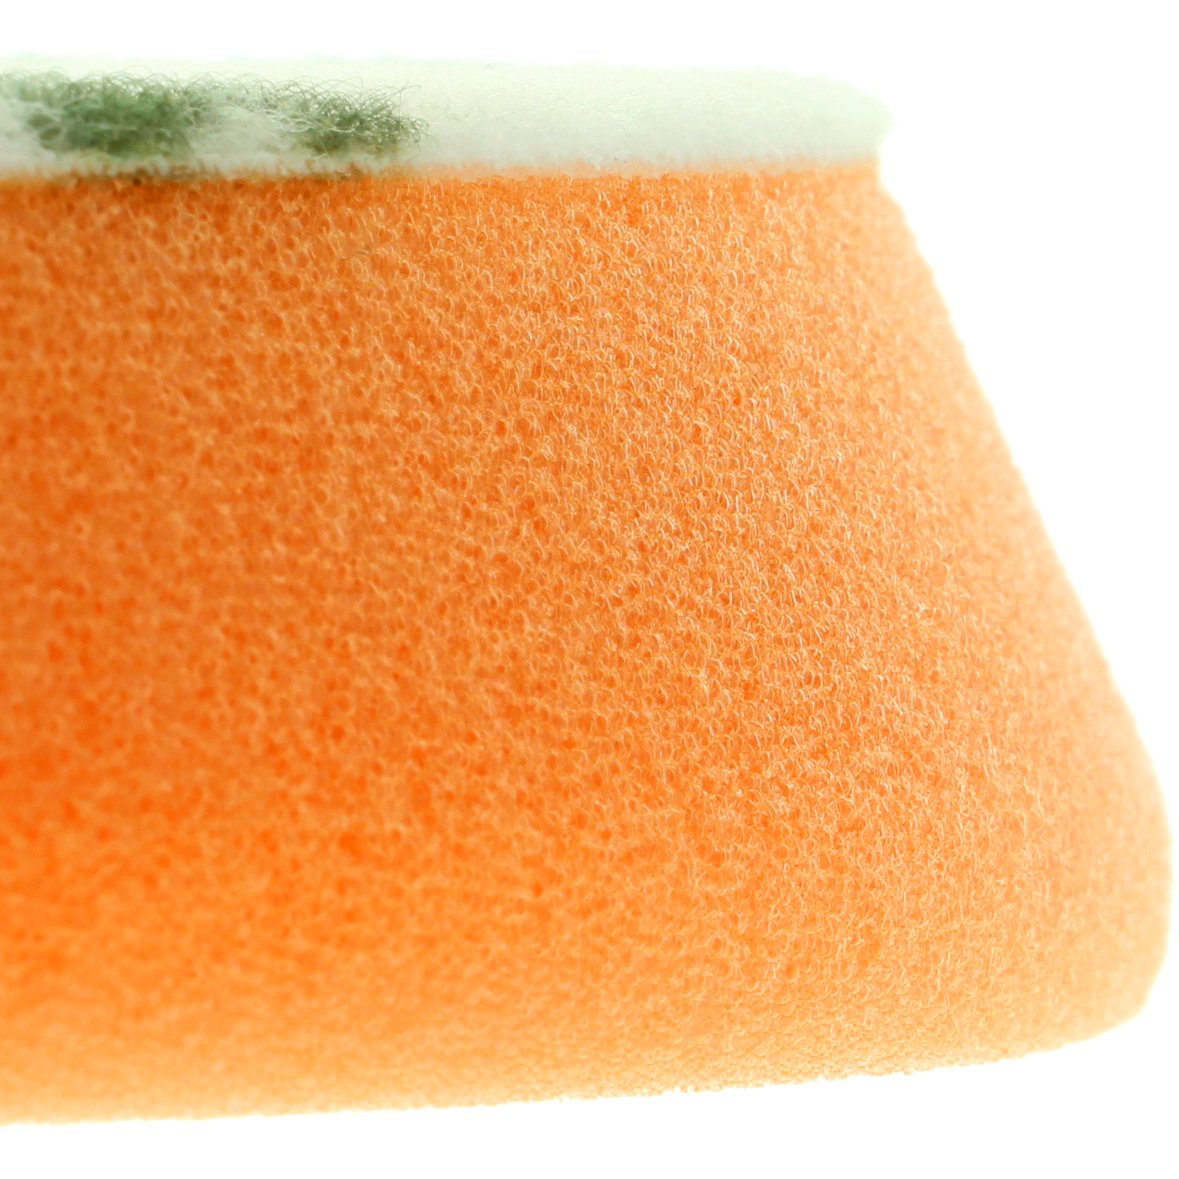 Uro-Cell Orange Polishing Foam Pad - 7 inch